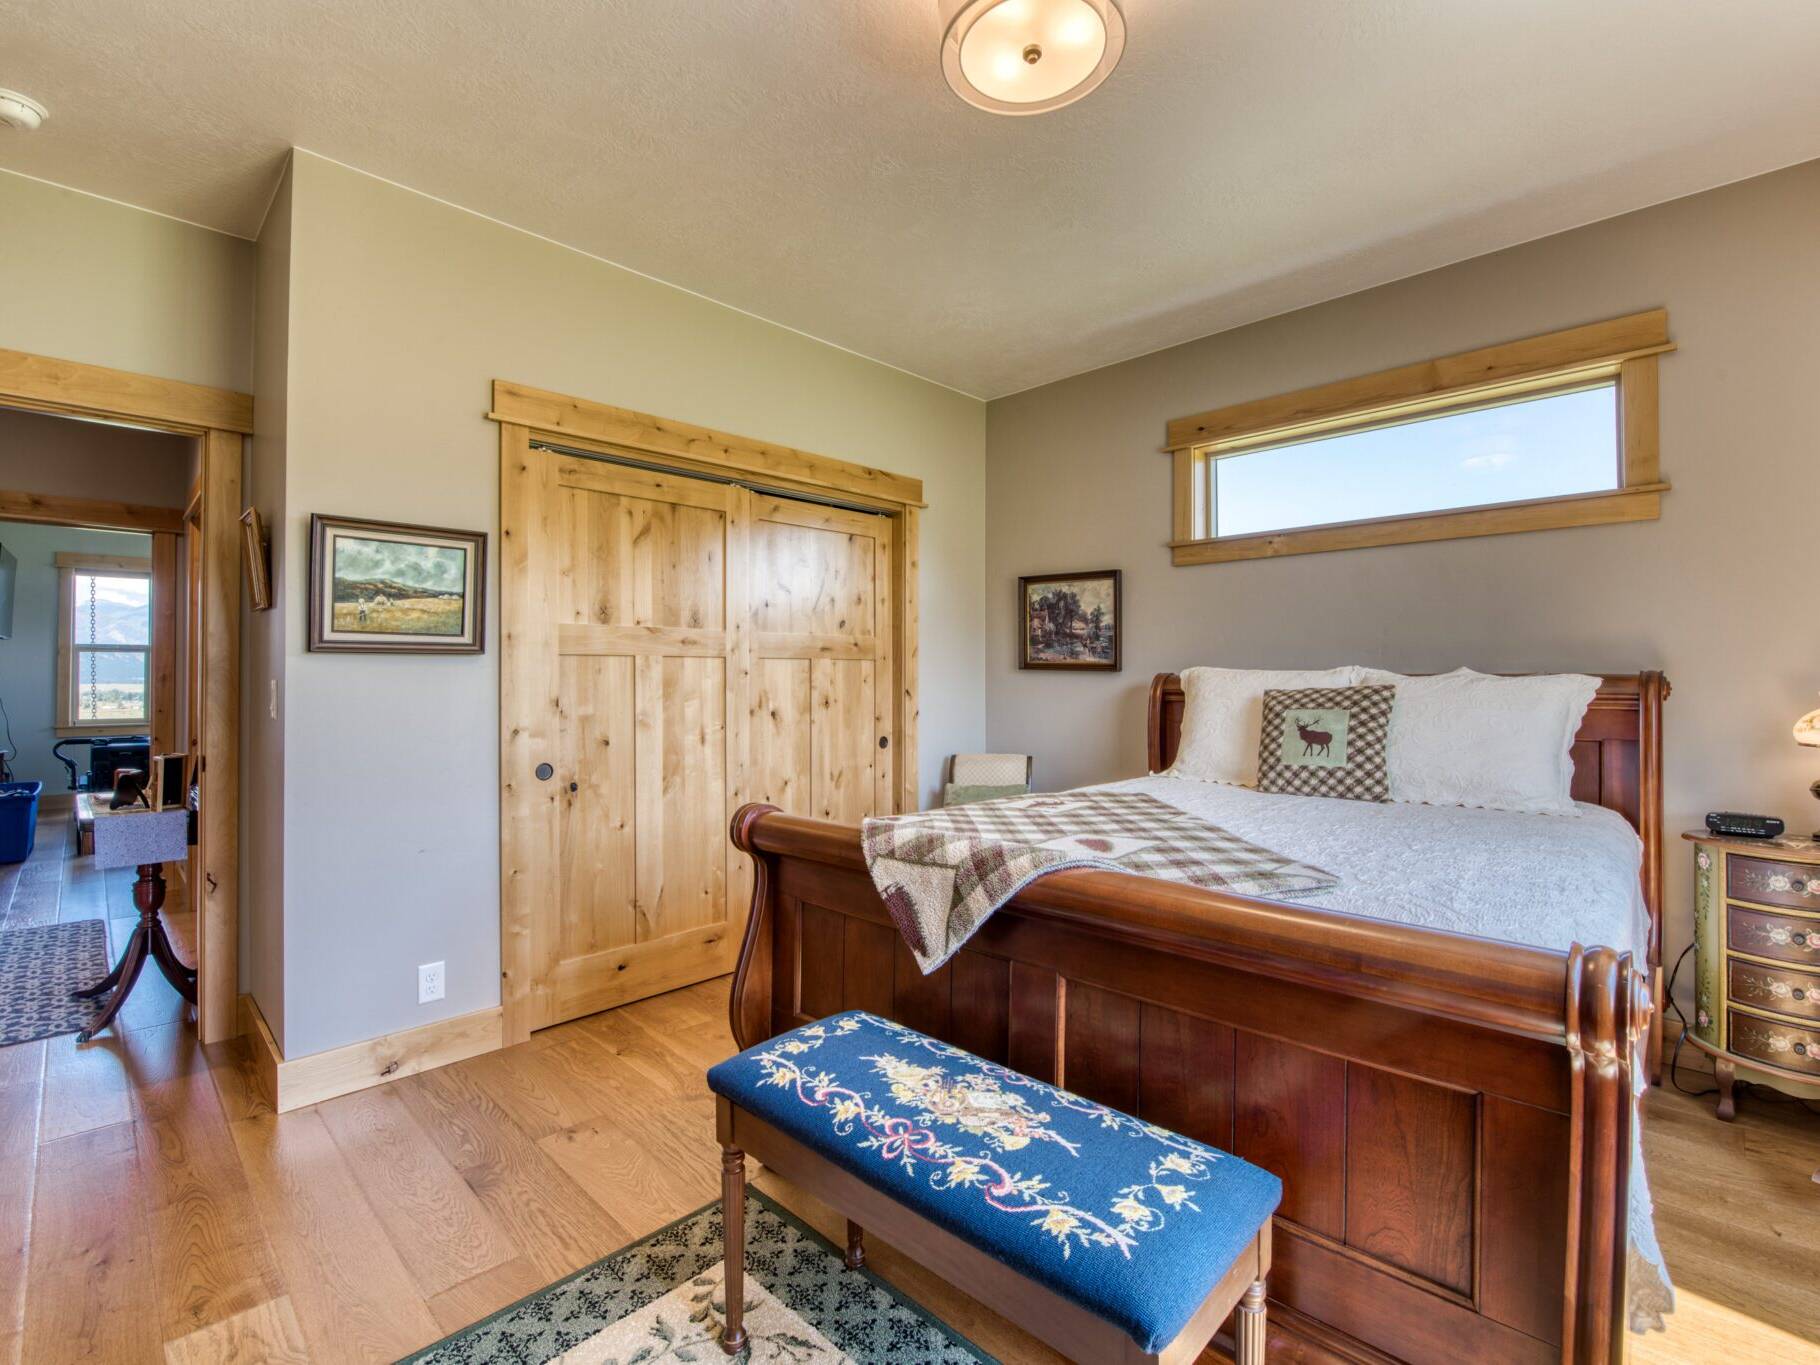 Guest bedroom in a custom home built by Big Sky Builders in Stevensville, MT